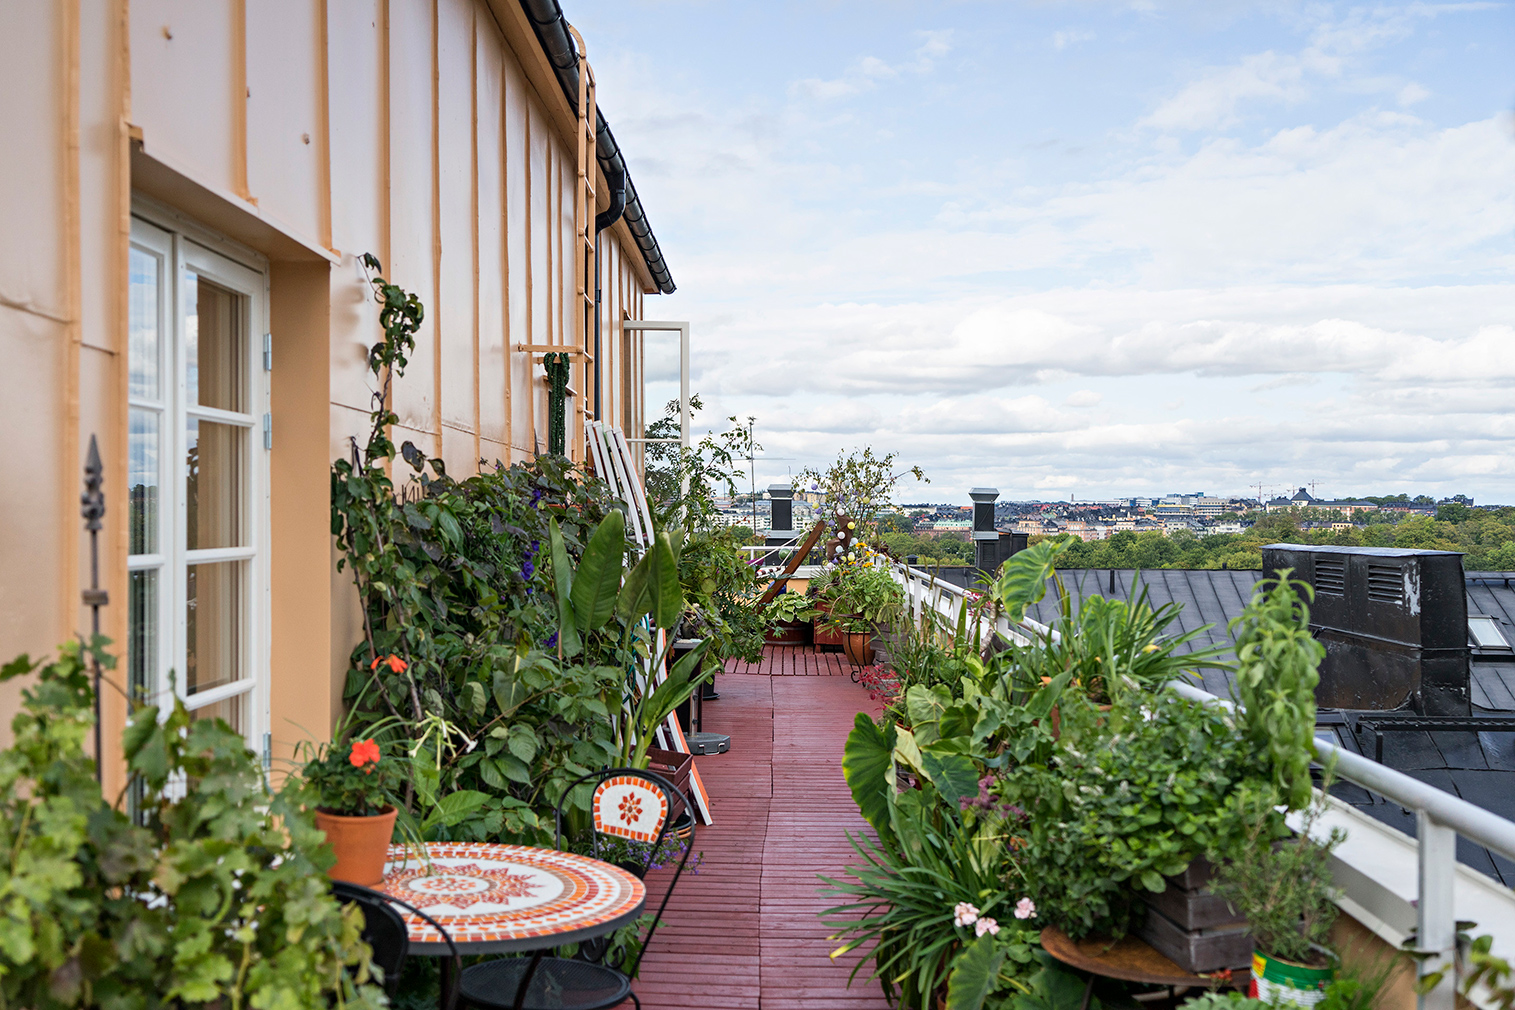 Rooftop cottage for sale in Stockholm